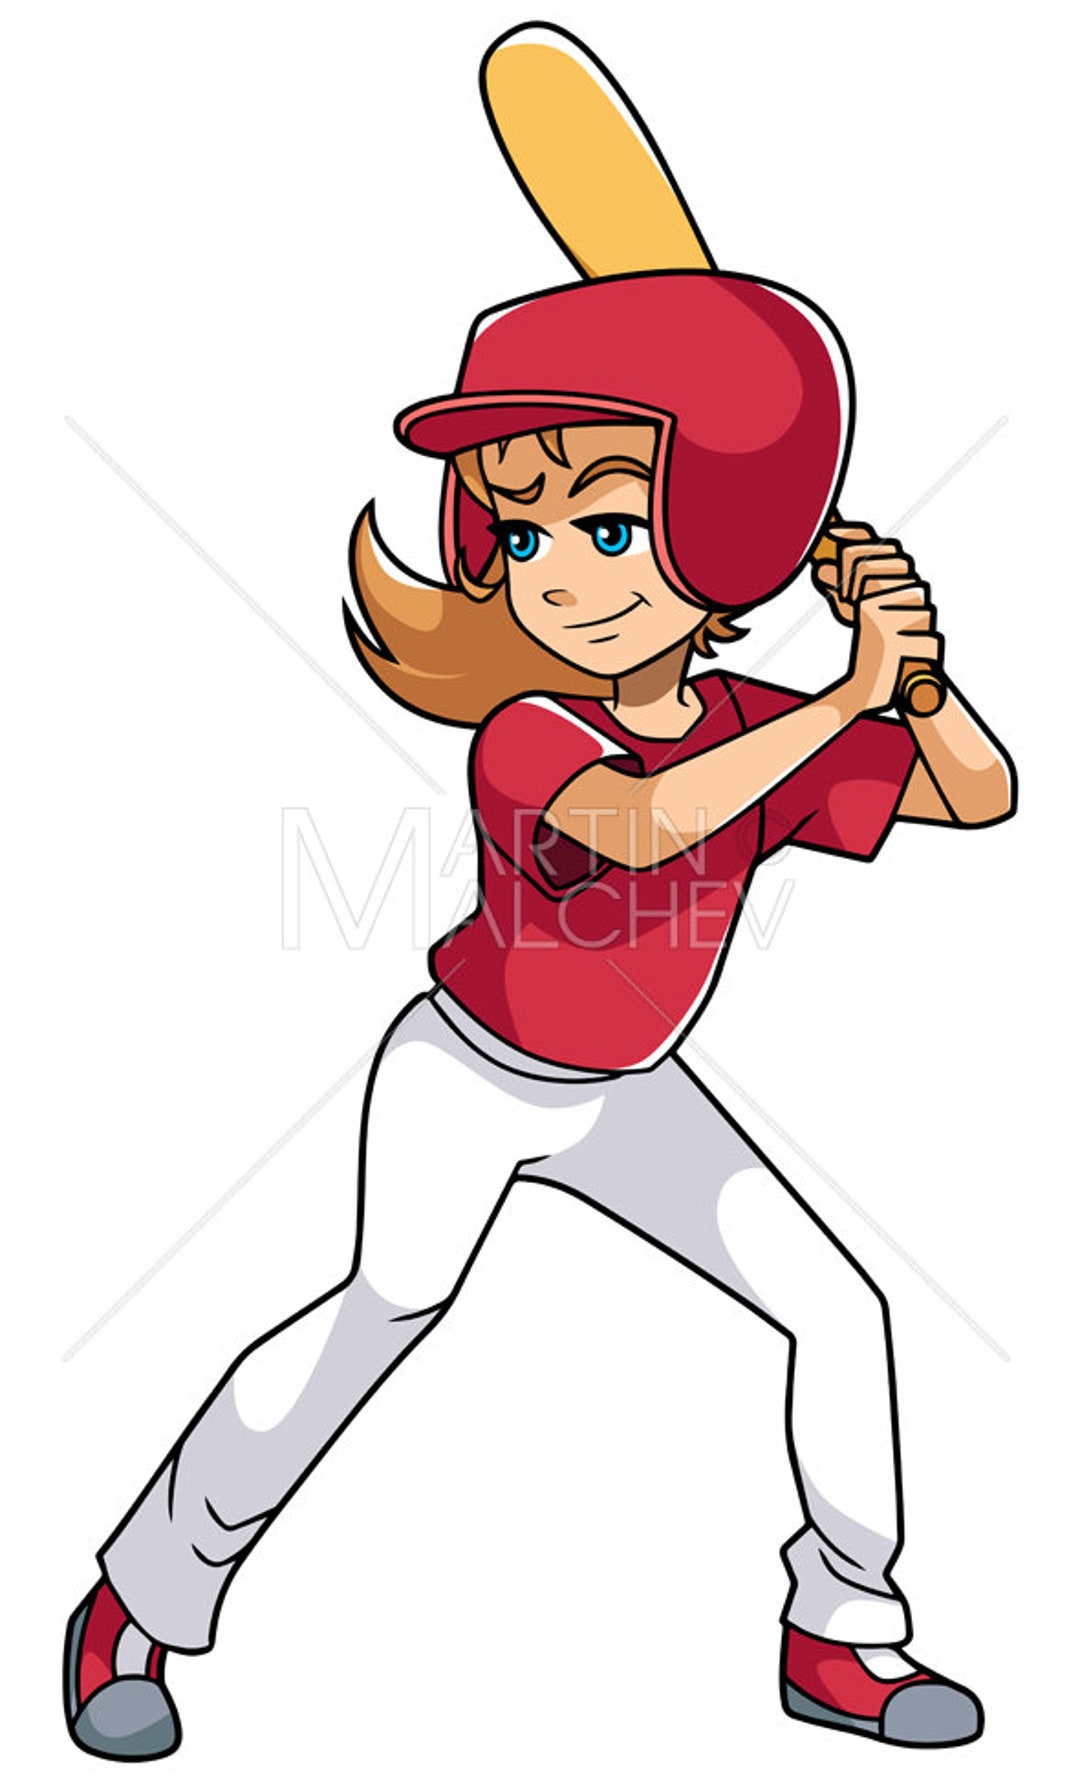 Baseball Batter Girl Vector Cartoon Illustration Girl Baseball Bat Playing Sport